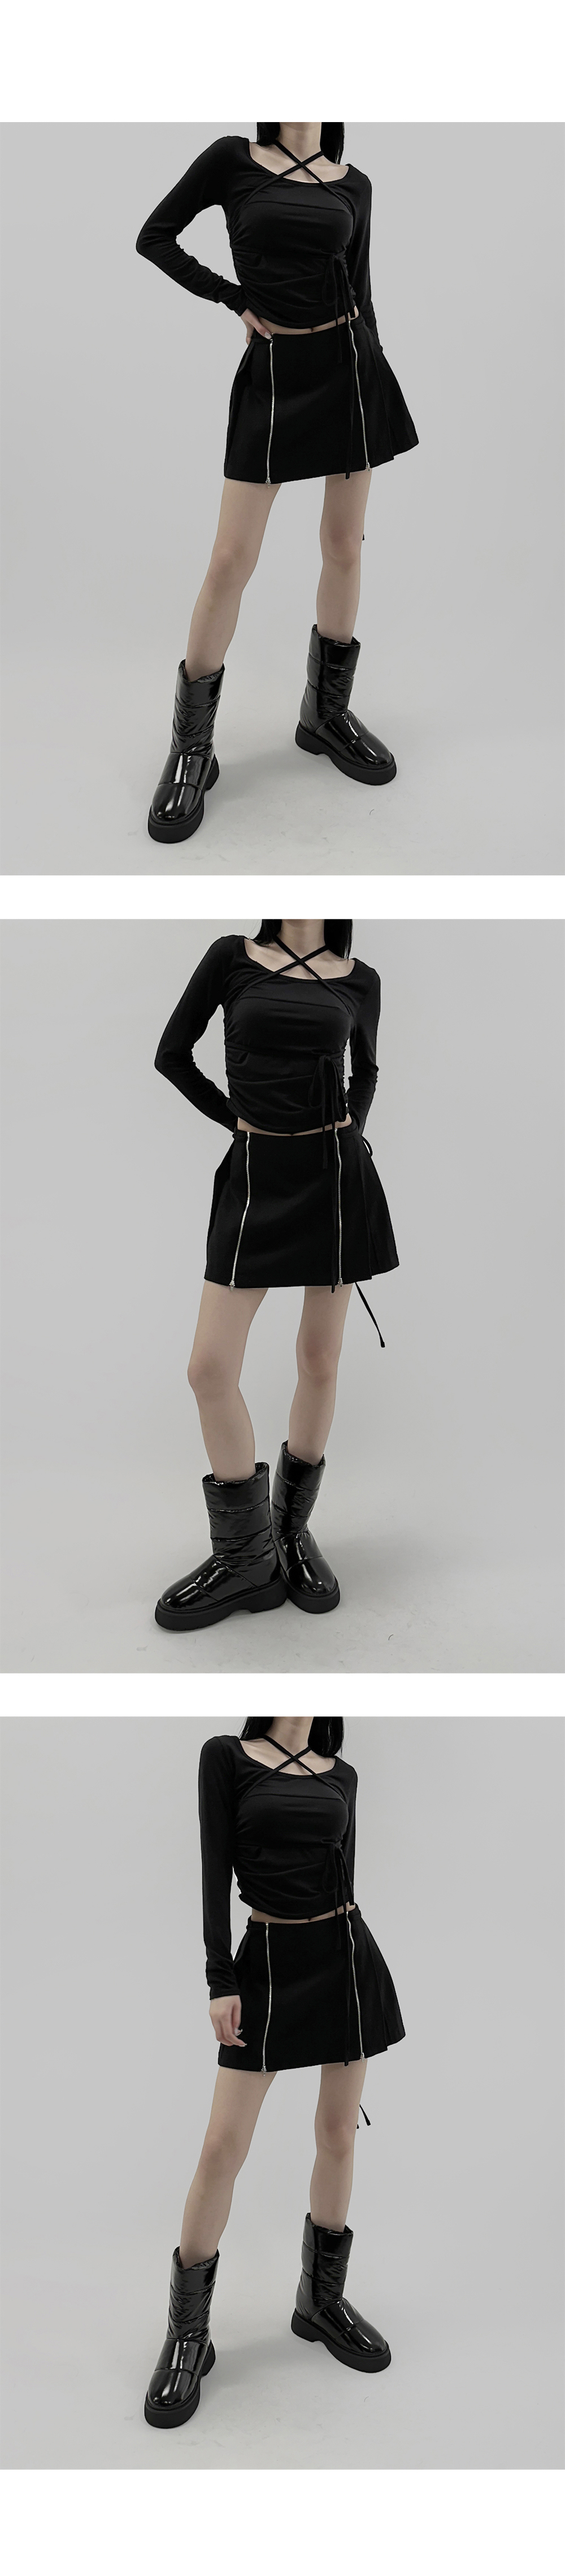 mini skirt grey color image-S1L5